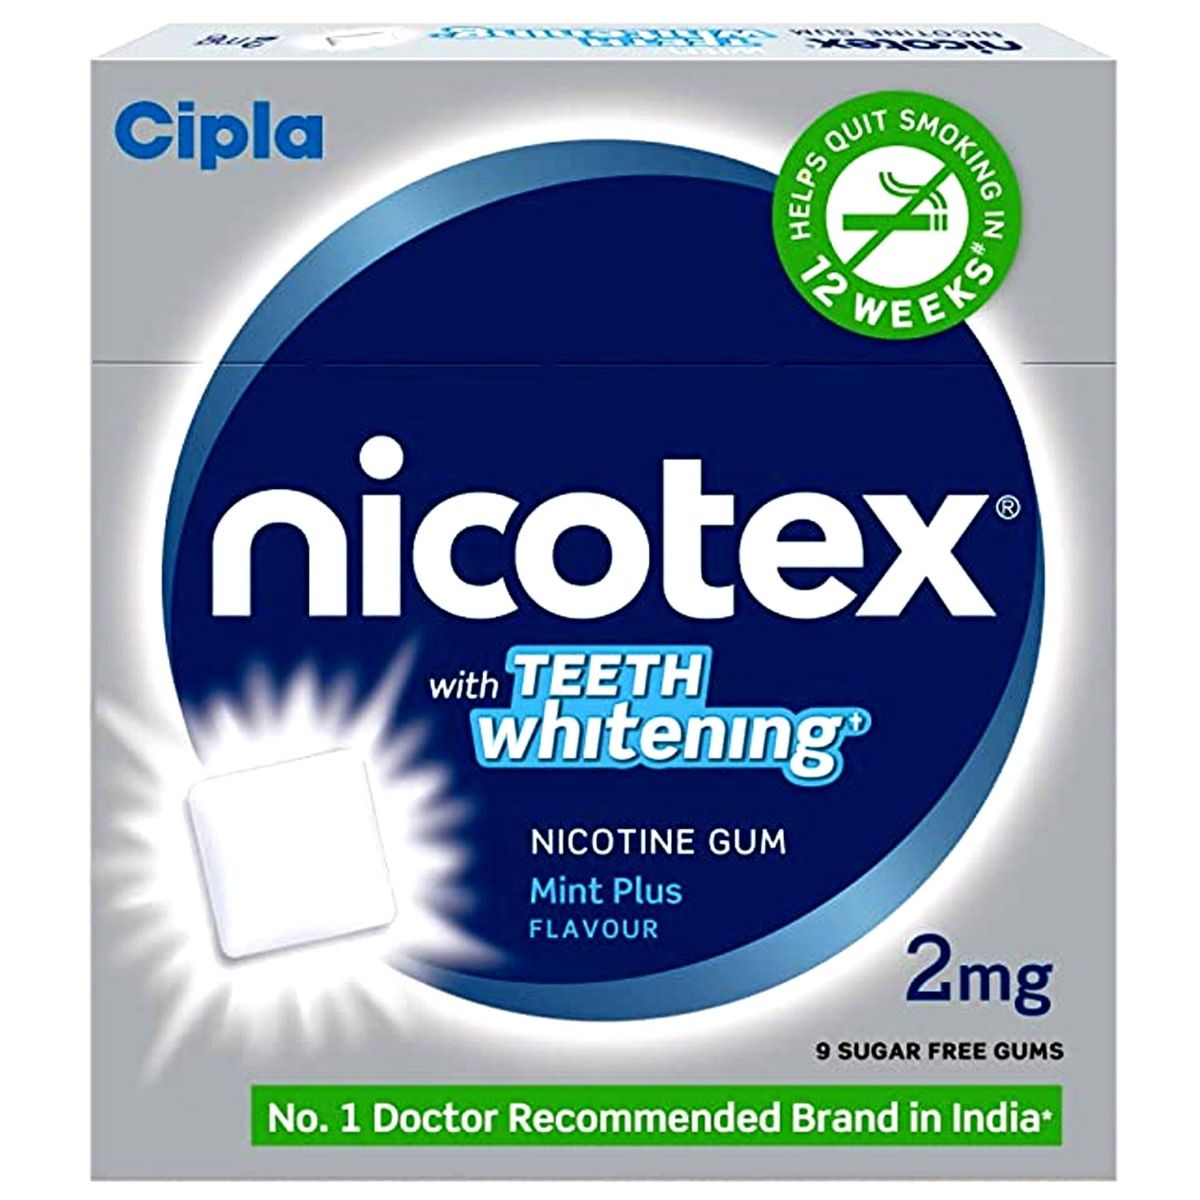 Nicotex Teeth Whitening Mint Plus 2mg, Pack of 1 